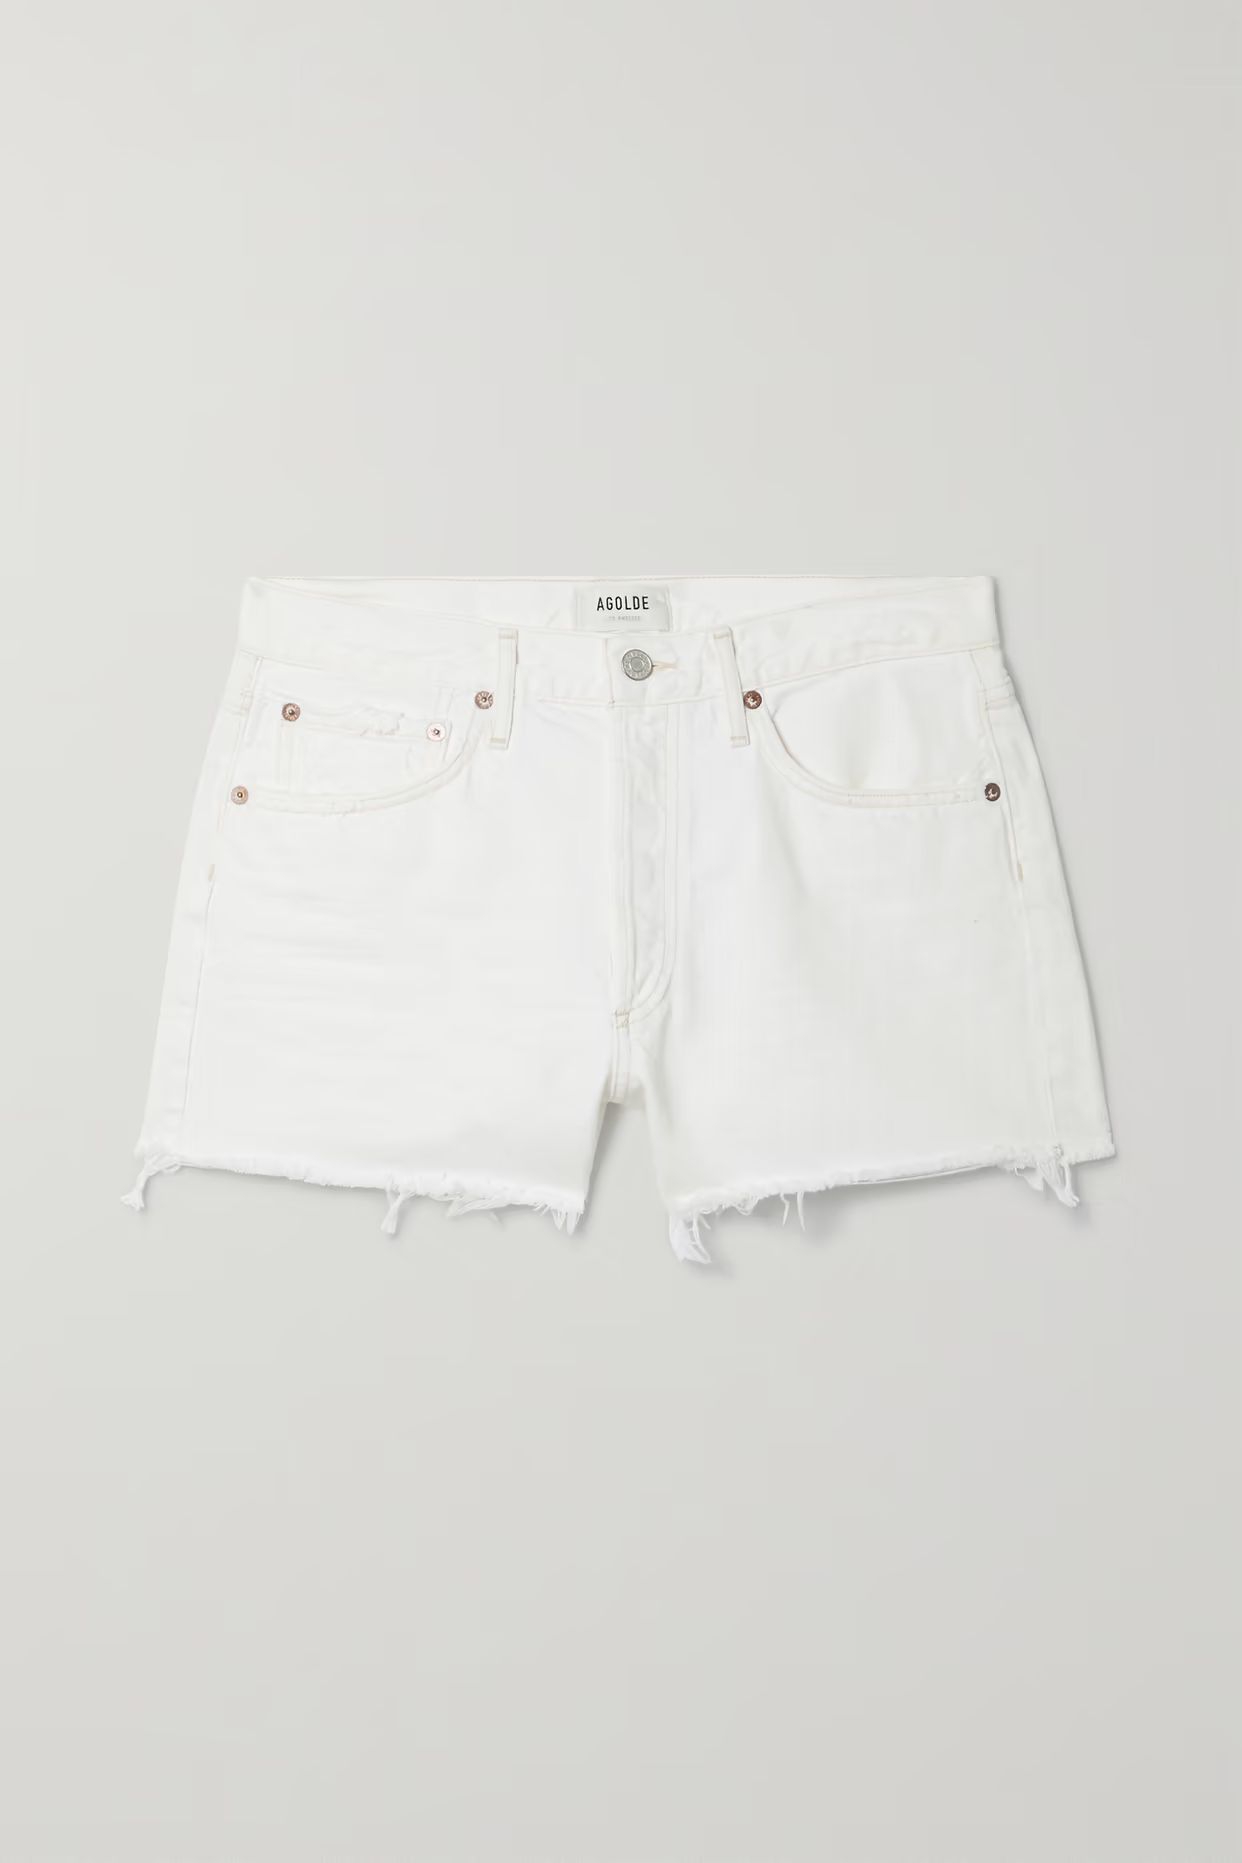 AGOLDE - Parker Distressed Denim Shorts - White | NET-A-PORTER (US)